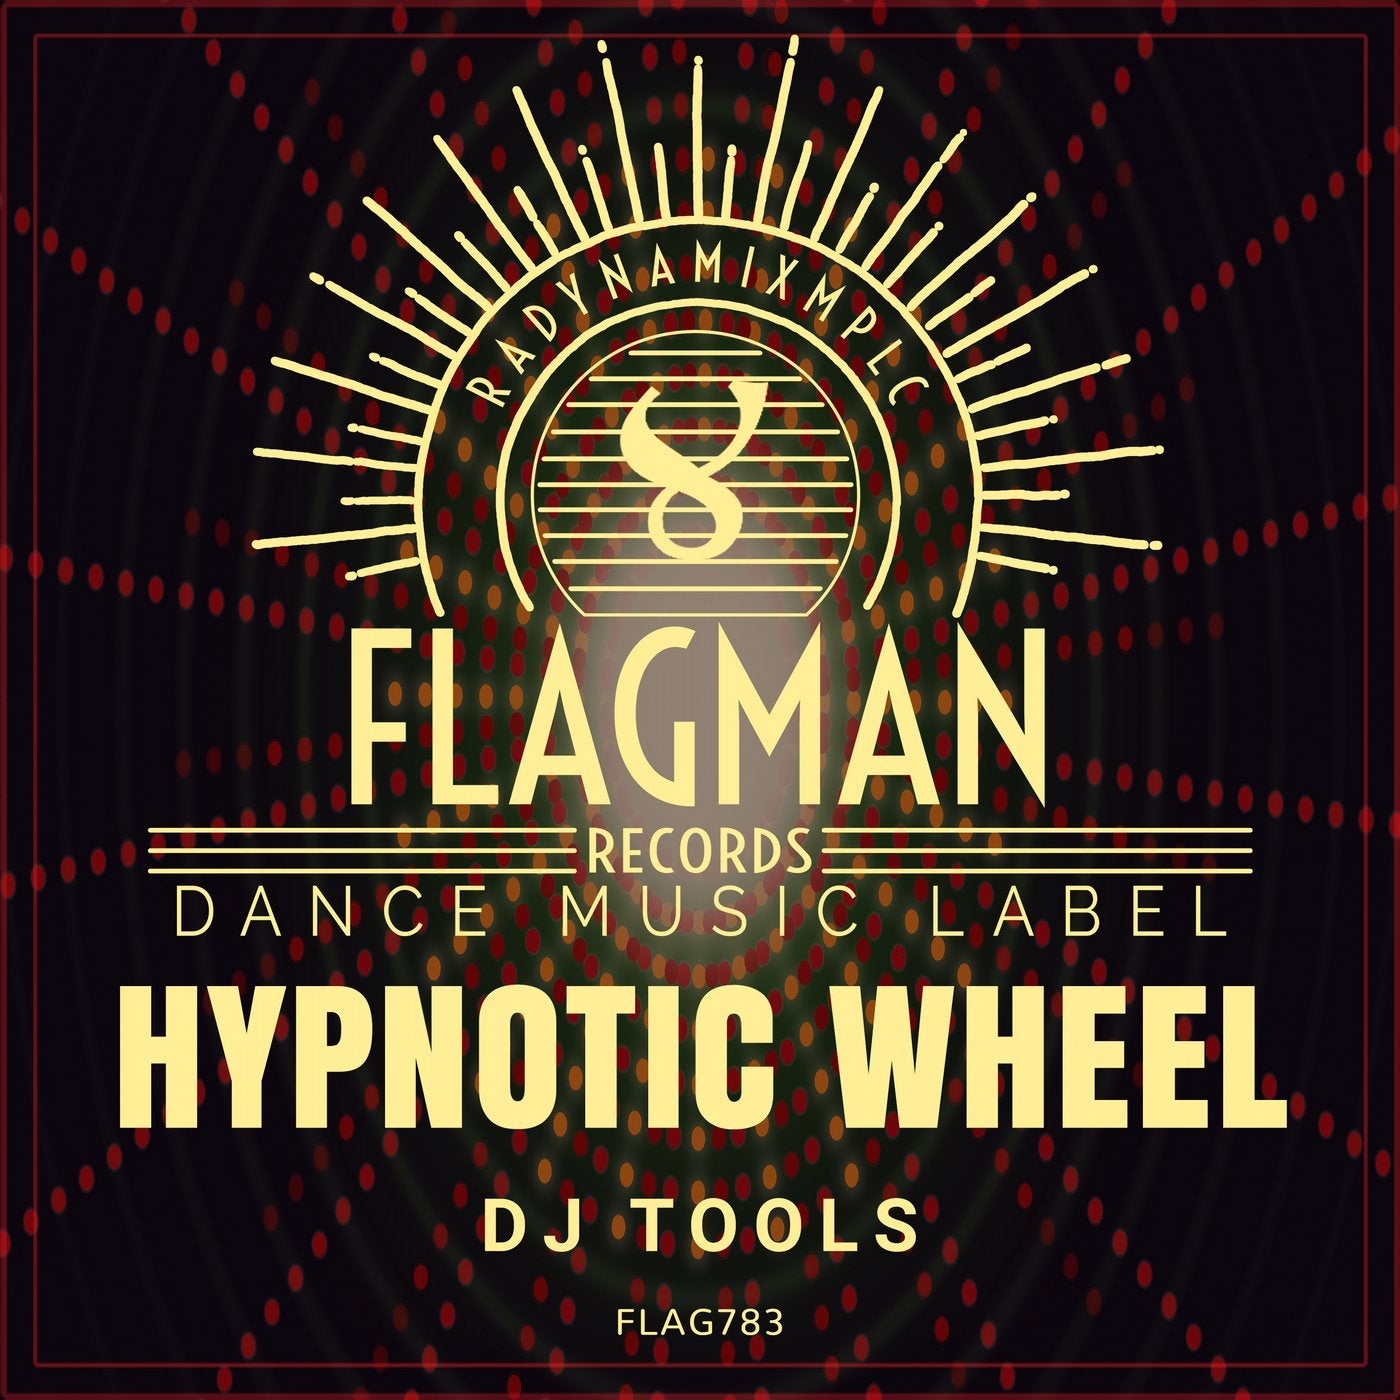 Hypnotic Wheel Dj Tools